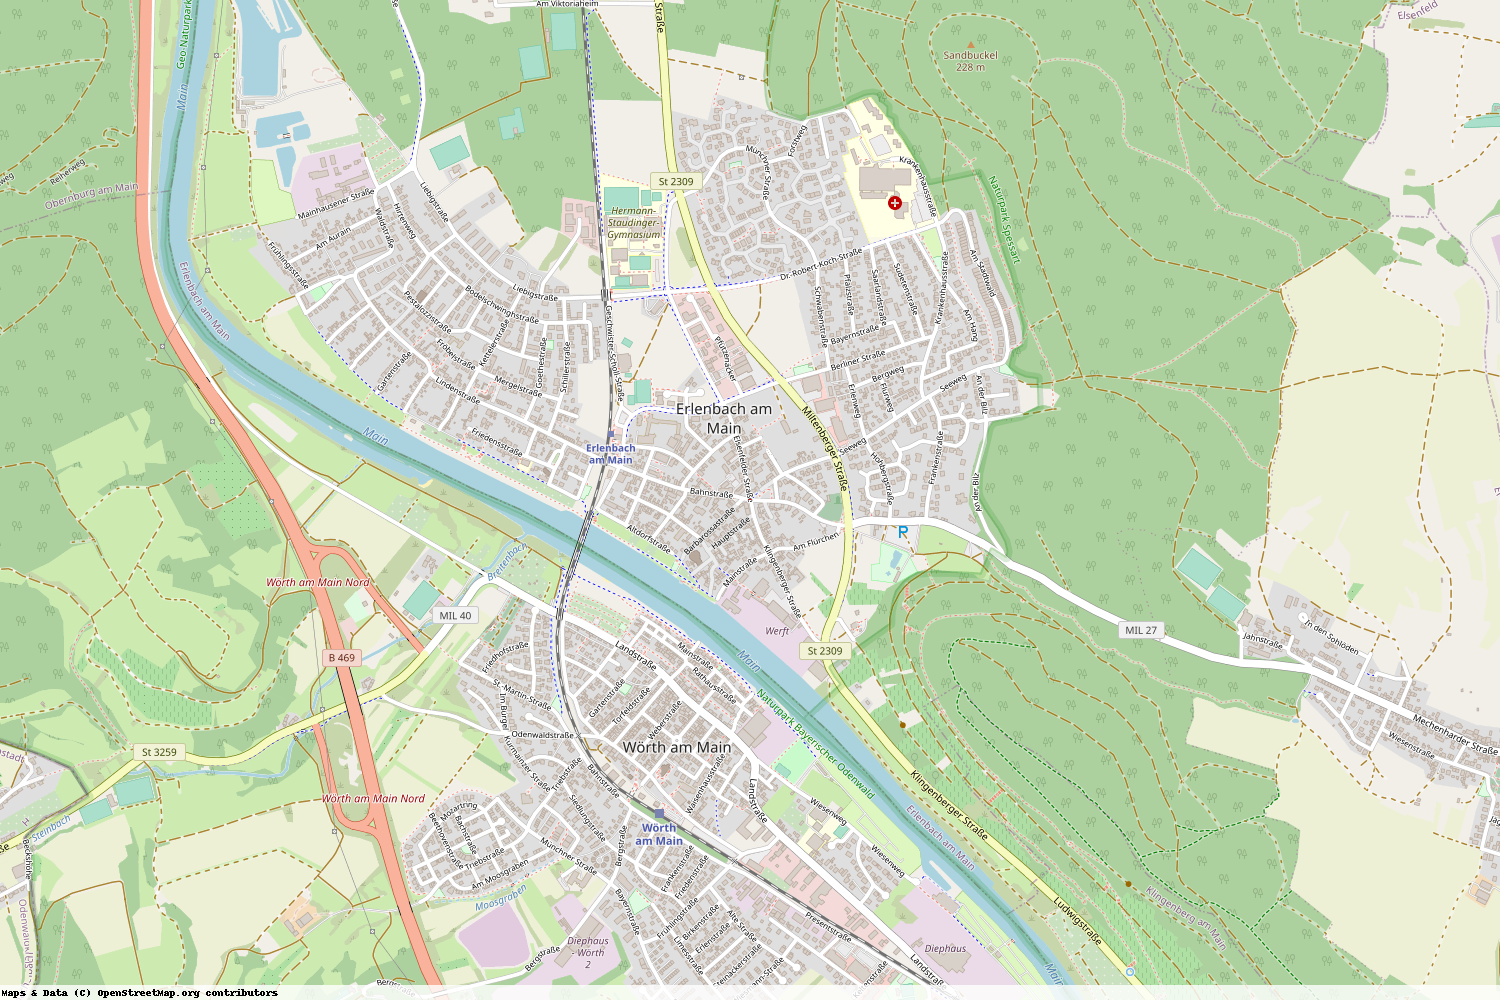 Ist gerade Stromausfall in Bayern - Miltenberg - Erlenbach a. Main?